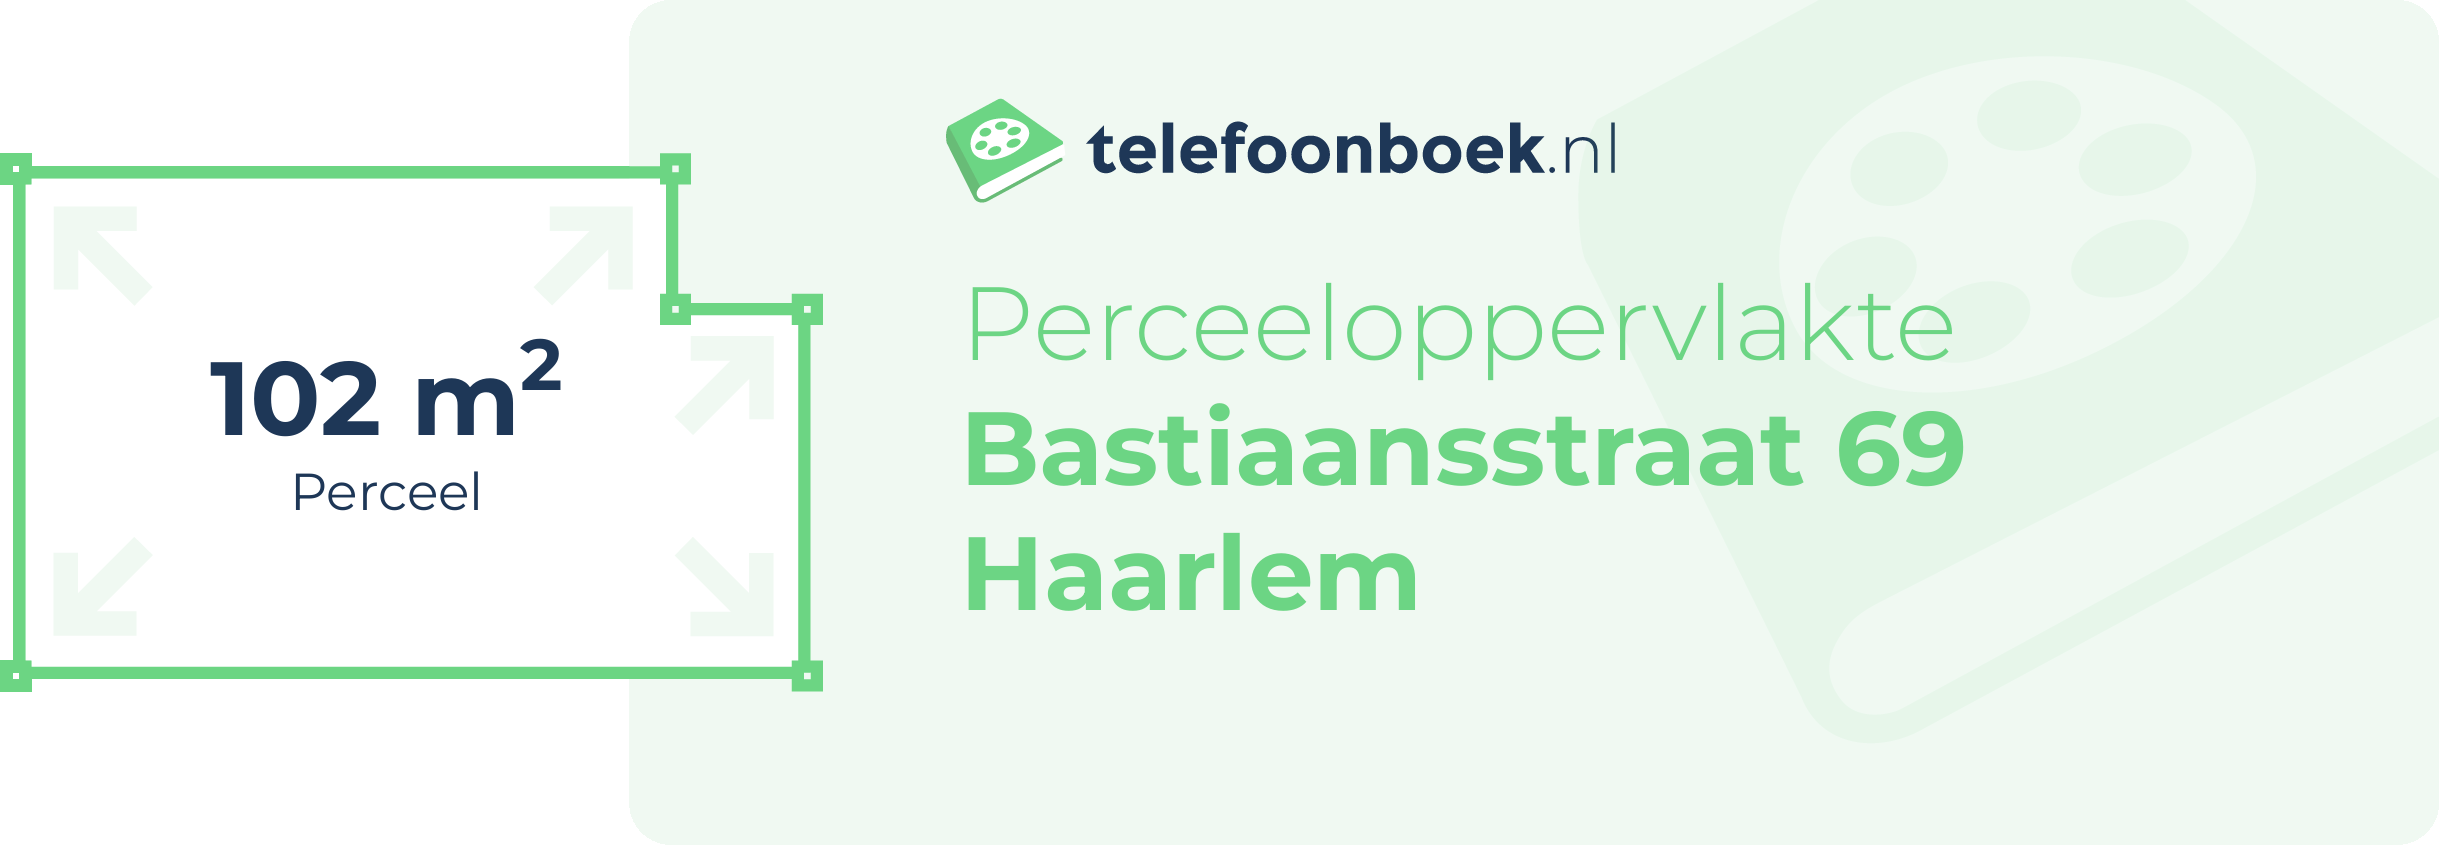 Perceeloppervlakte Bastiaansstraat 69 Haarlem